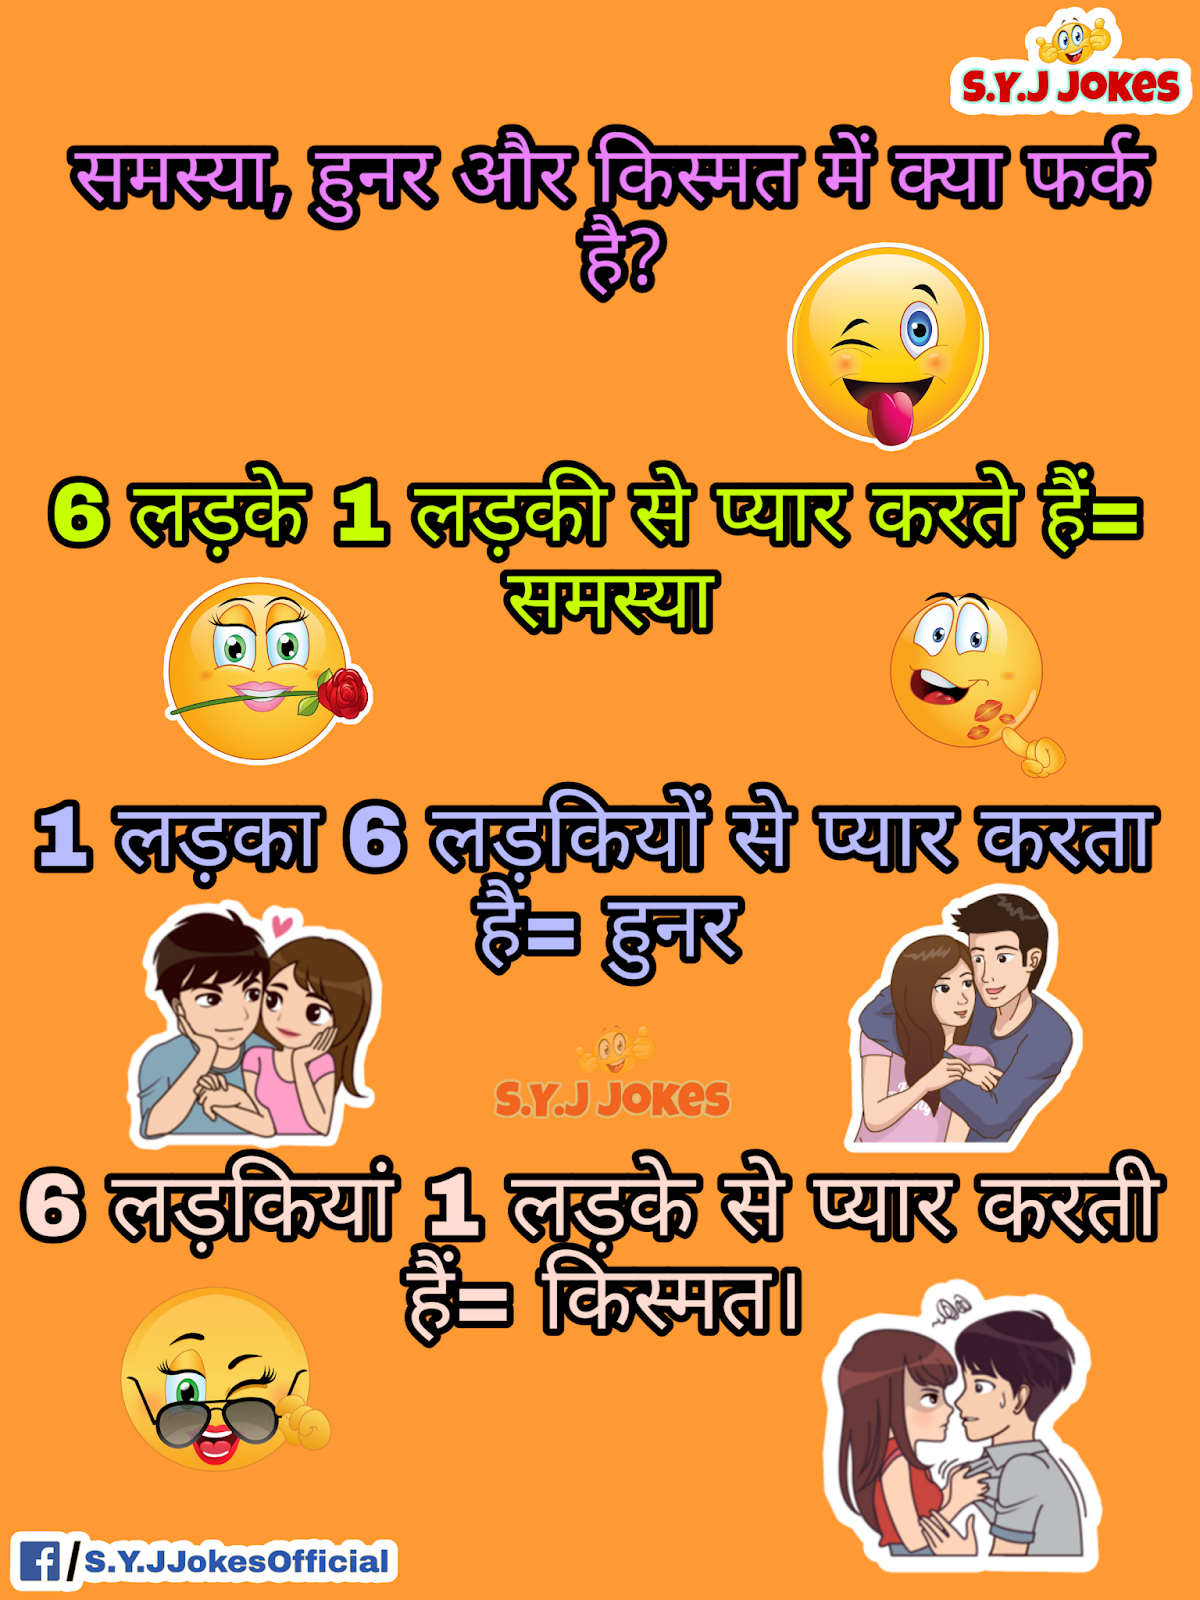 Funny Love Jokes In Hindi For Girlfriend Love Shayari In Hindi For Girlfriend With Image Love